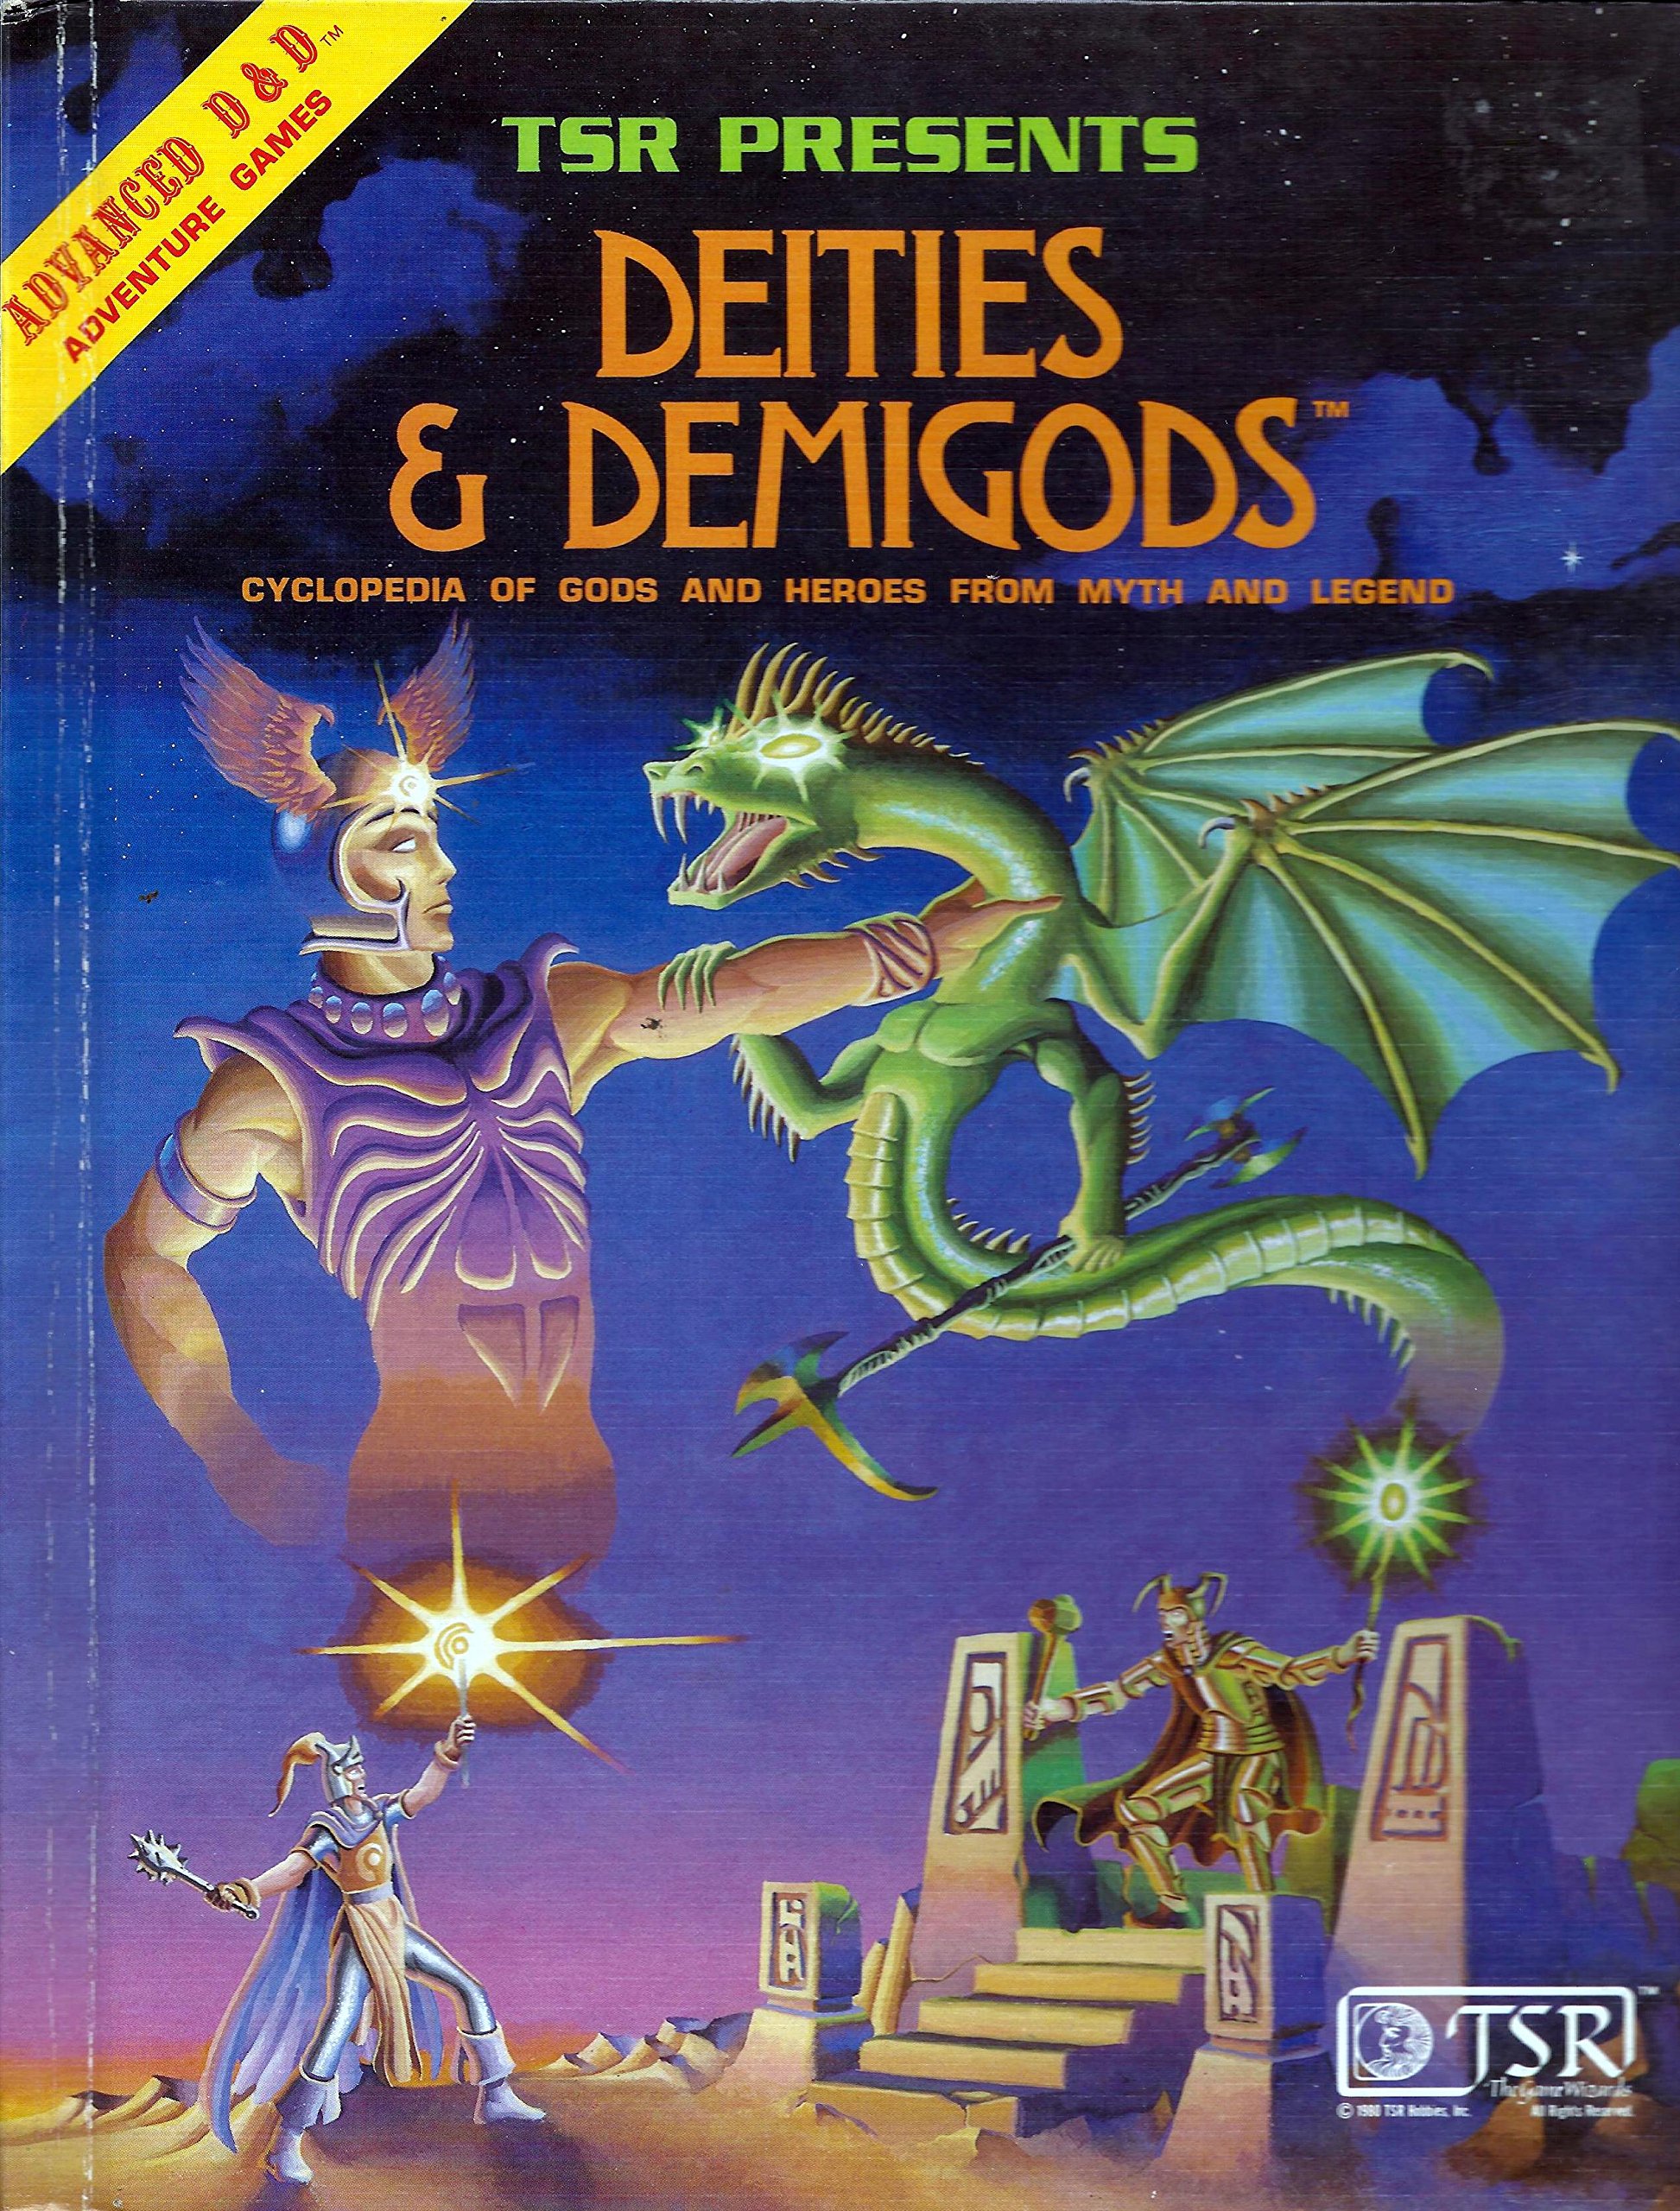 Book Review: Deities and Demigods (1980)